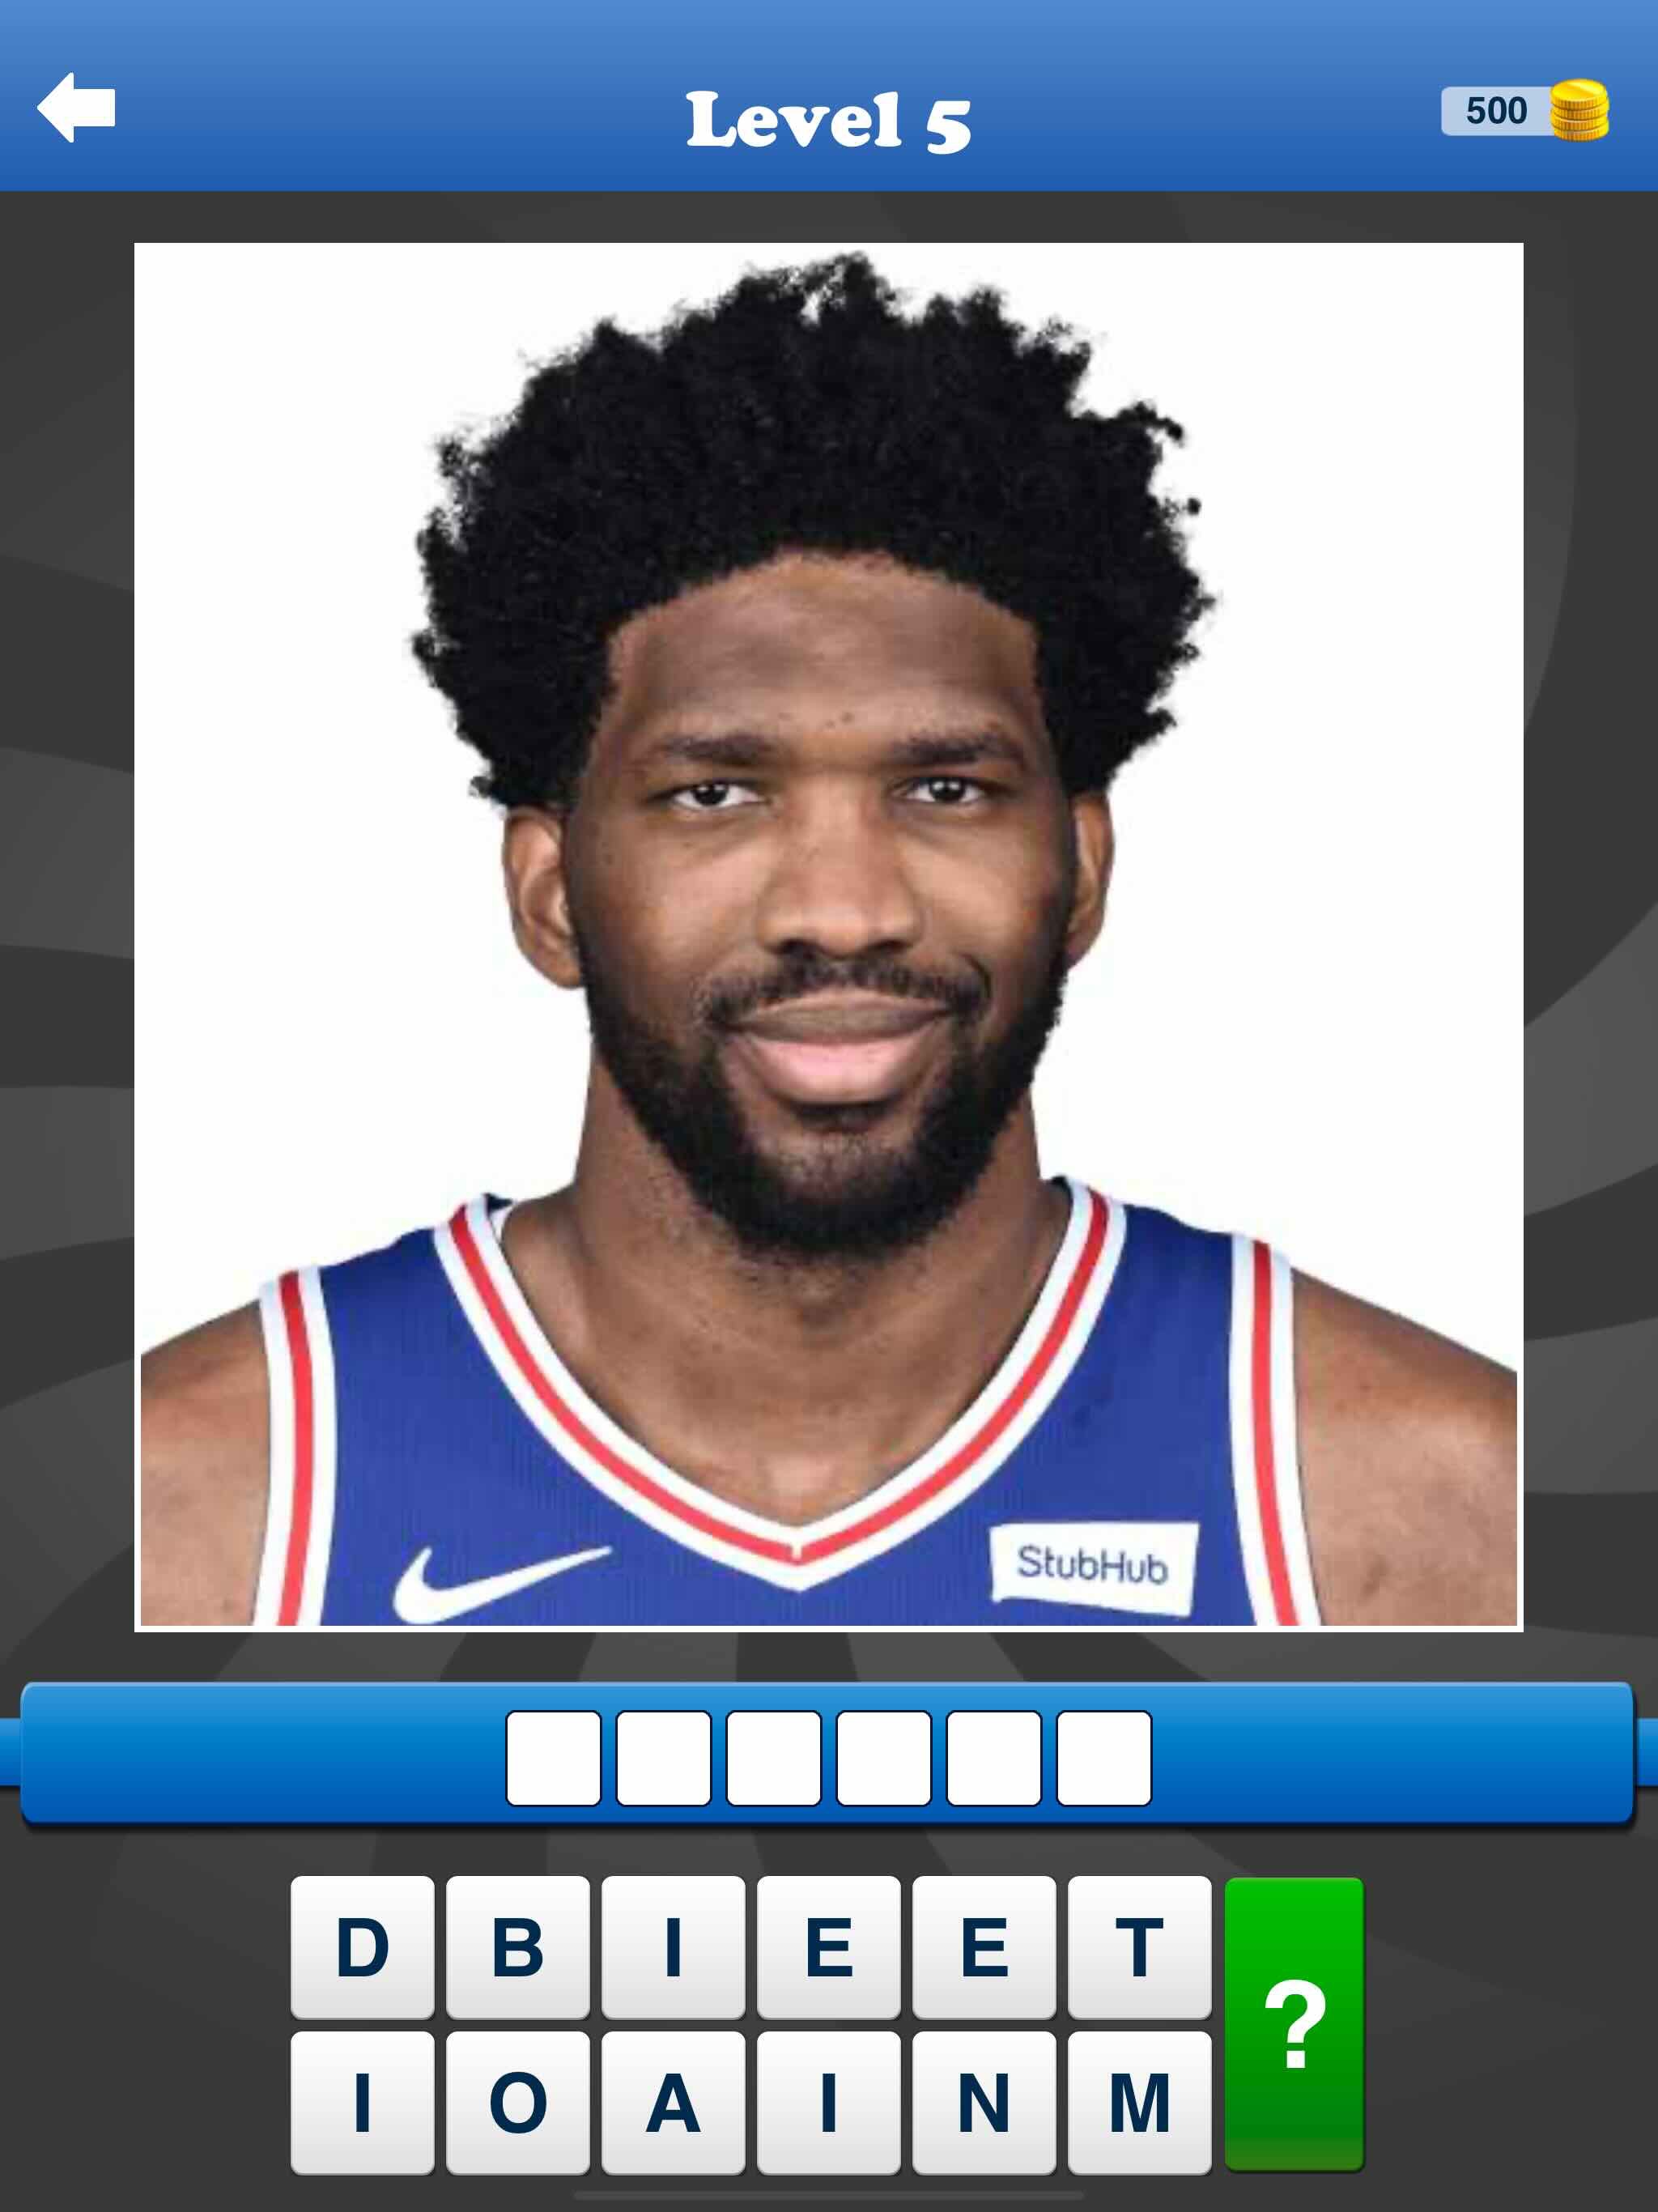 Whos the Player Basketball Appのおすすめ画像10